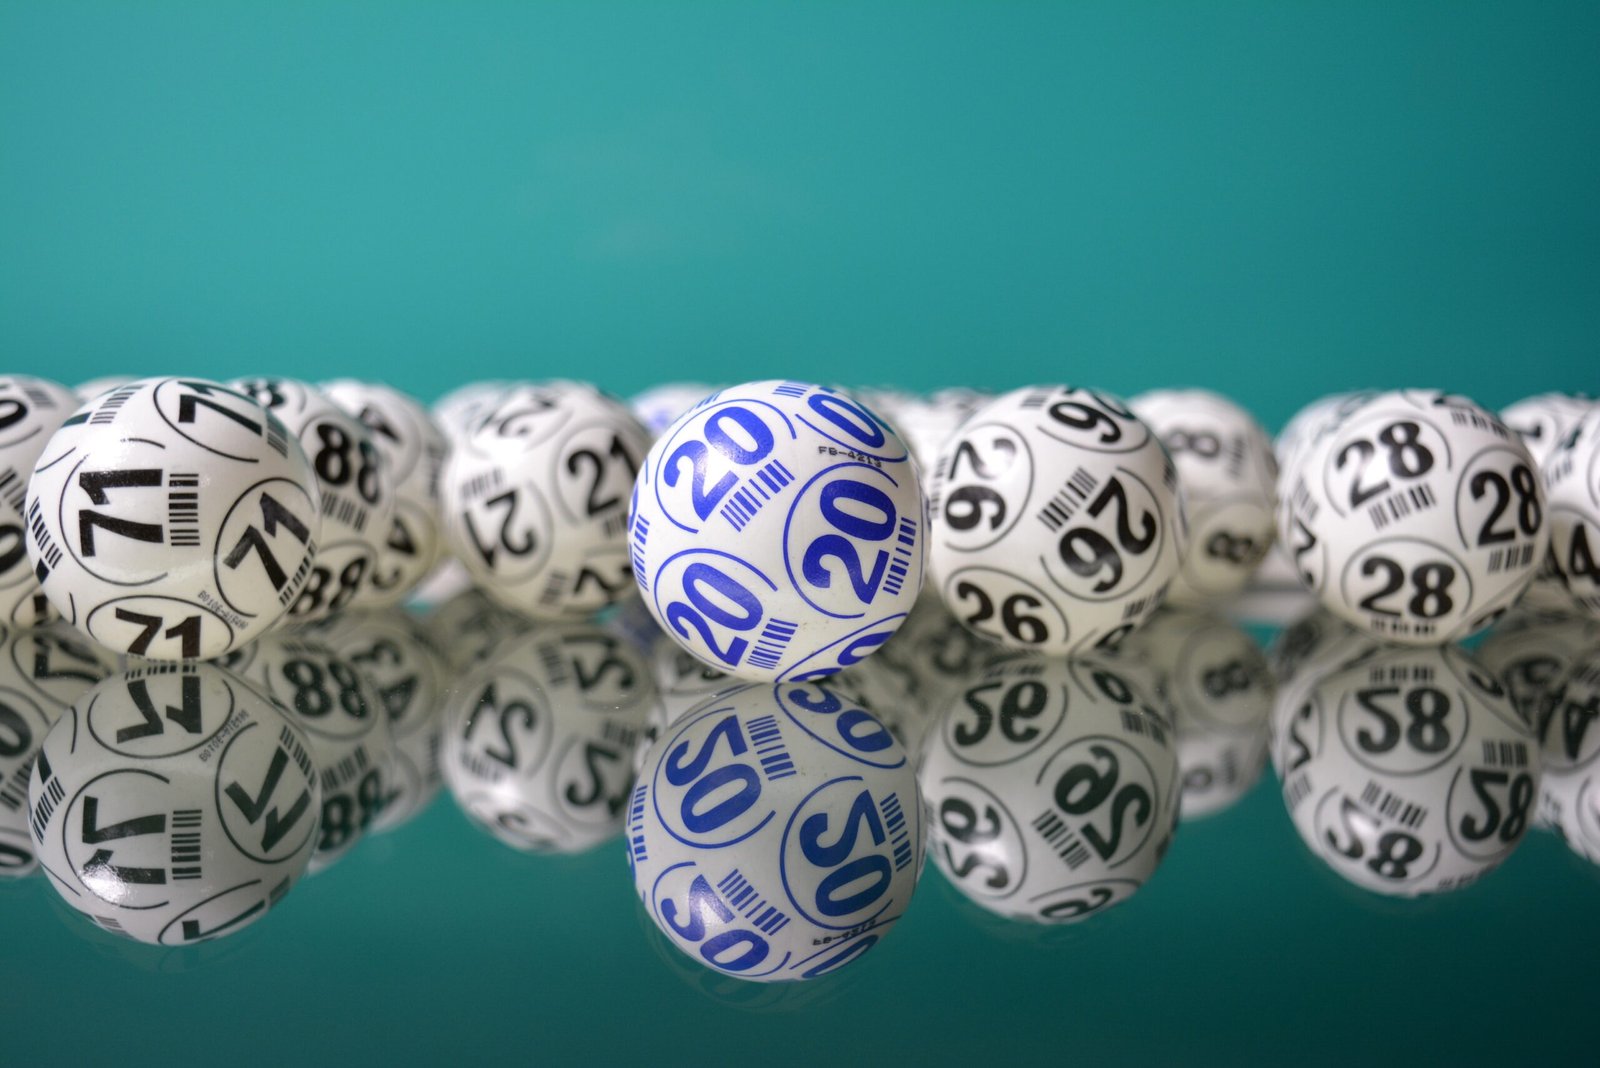 Lottery balls on a shiny table